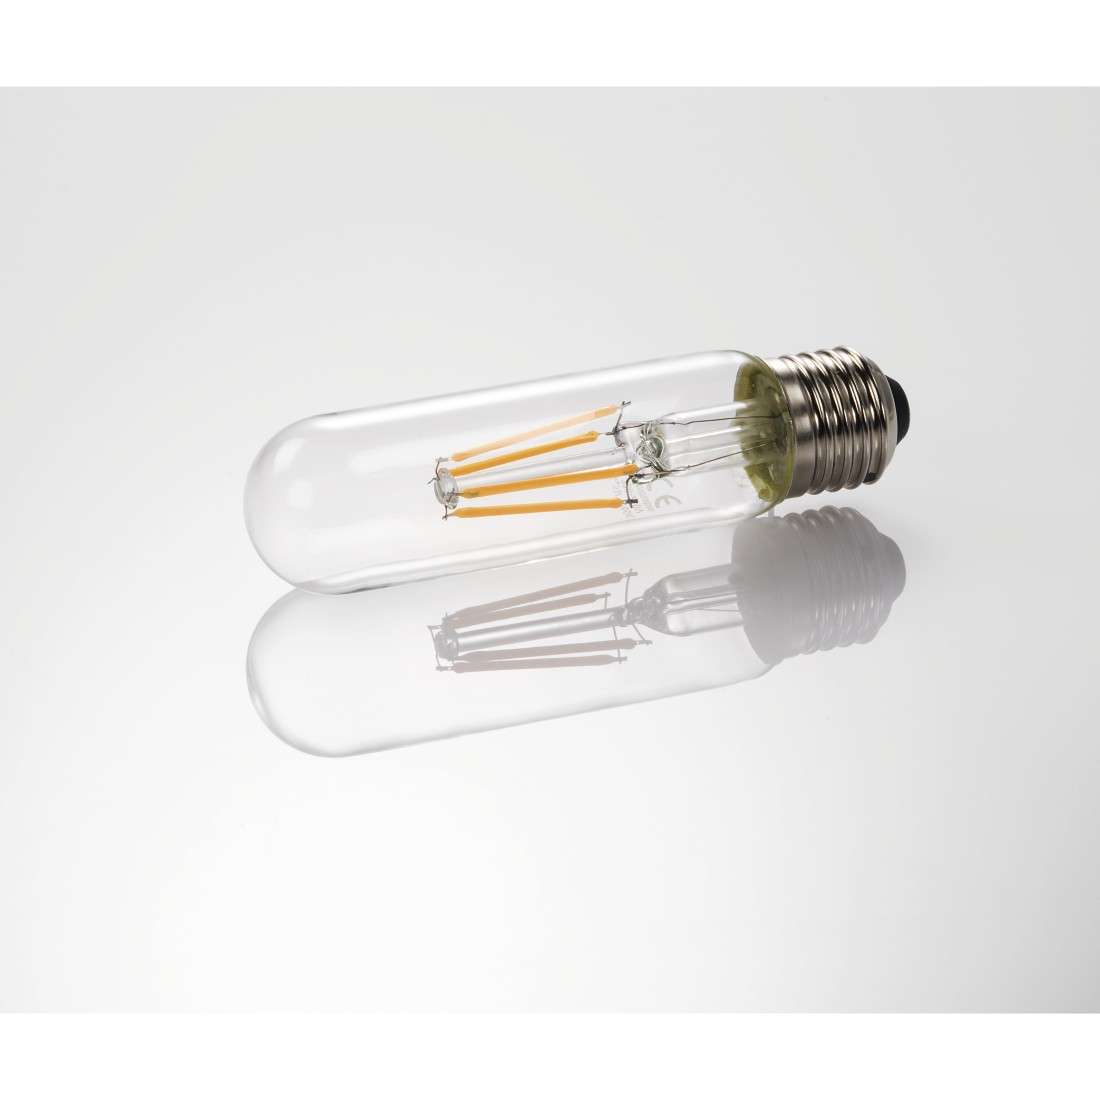 LED-Filament, E27, 470lm ersetzt 40W, T32 Röhrenlampe, Warmweiß, dimmbar